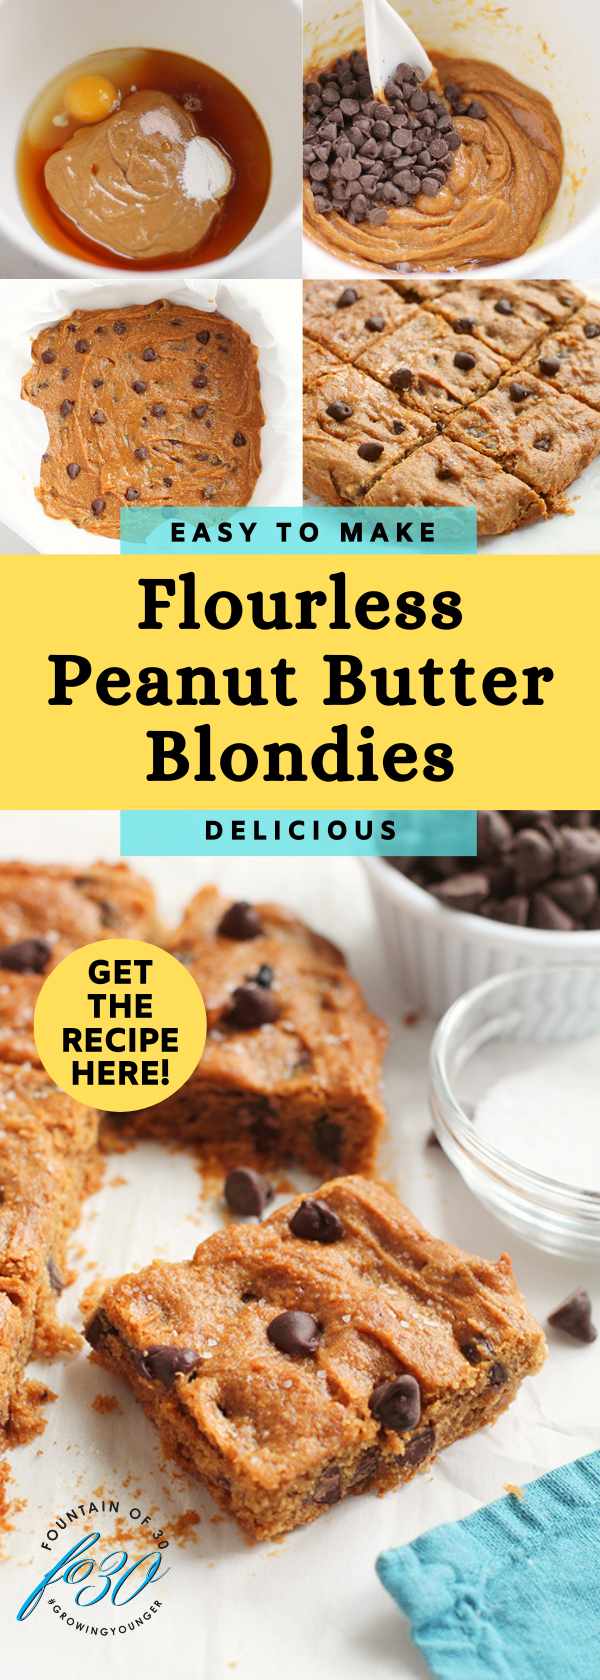 easy gluten free peanut butter blondies recipe fountainof30